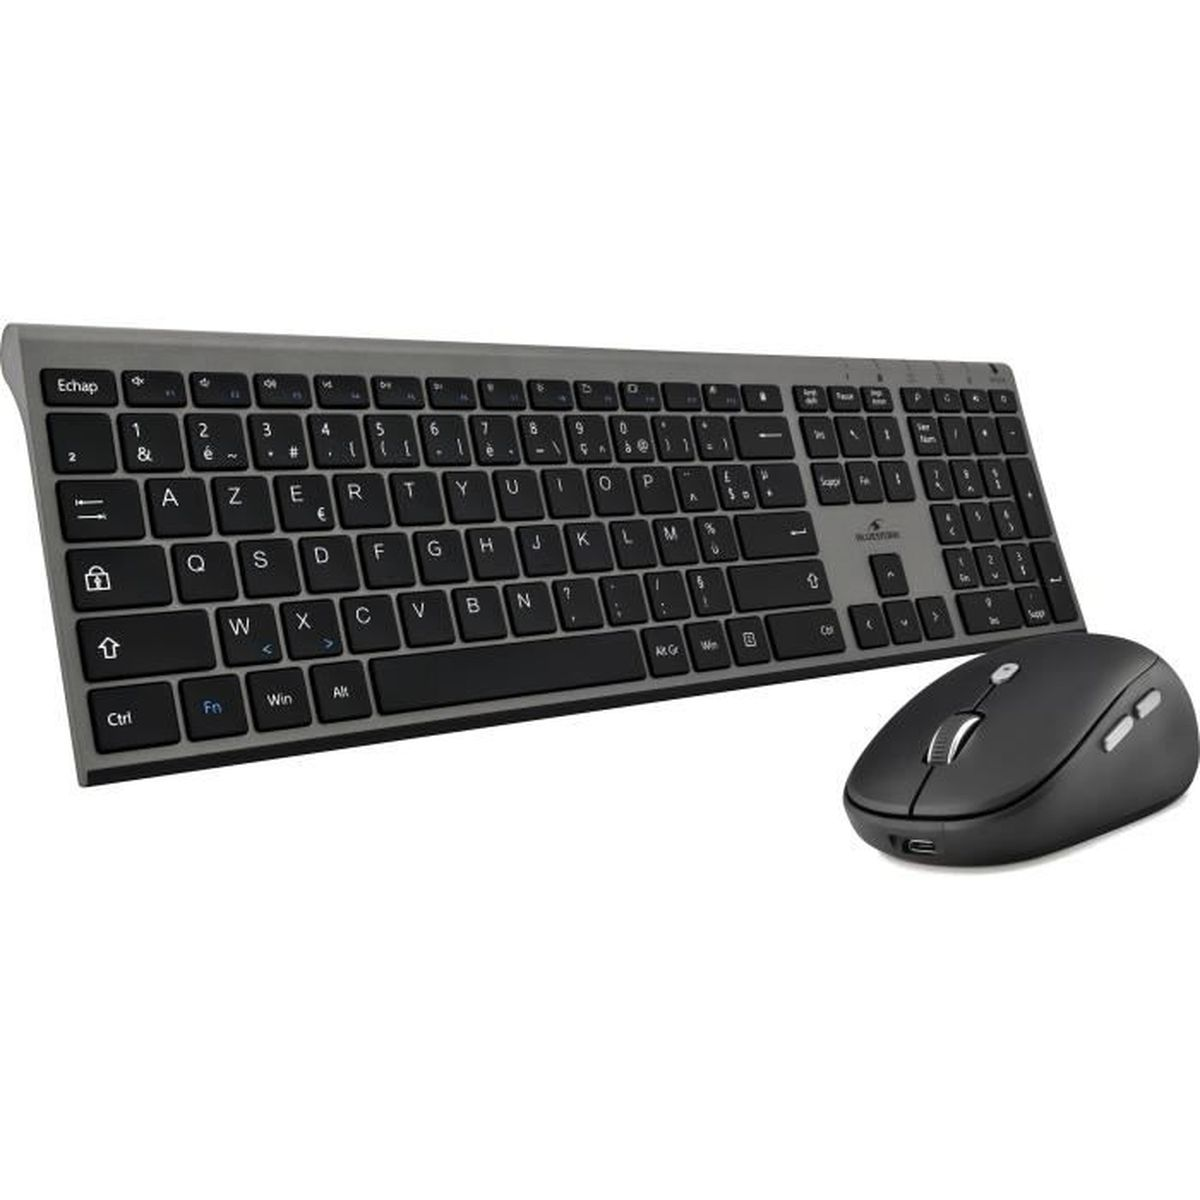 PACK-WL-PC-BK/FR, BLUESTORK Grau Tastatur-Maus-Set,